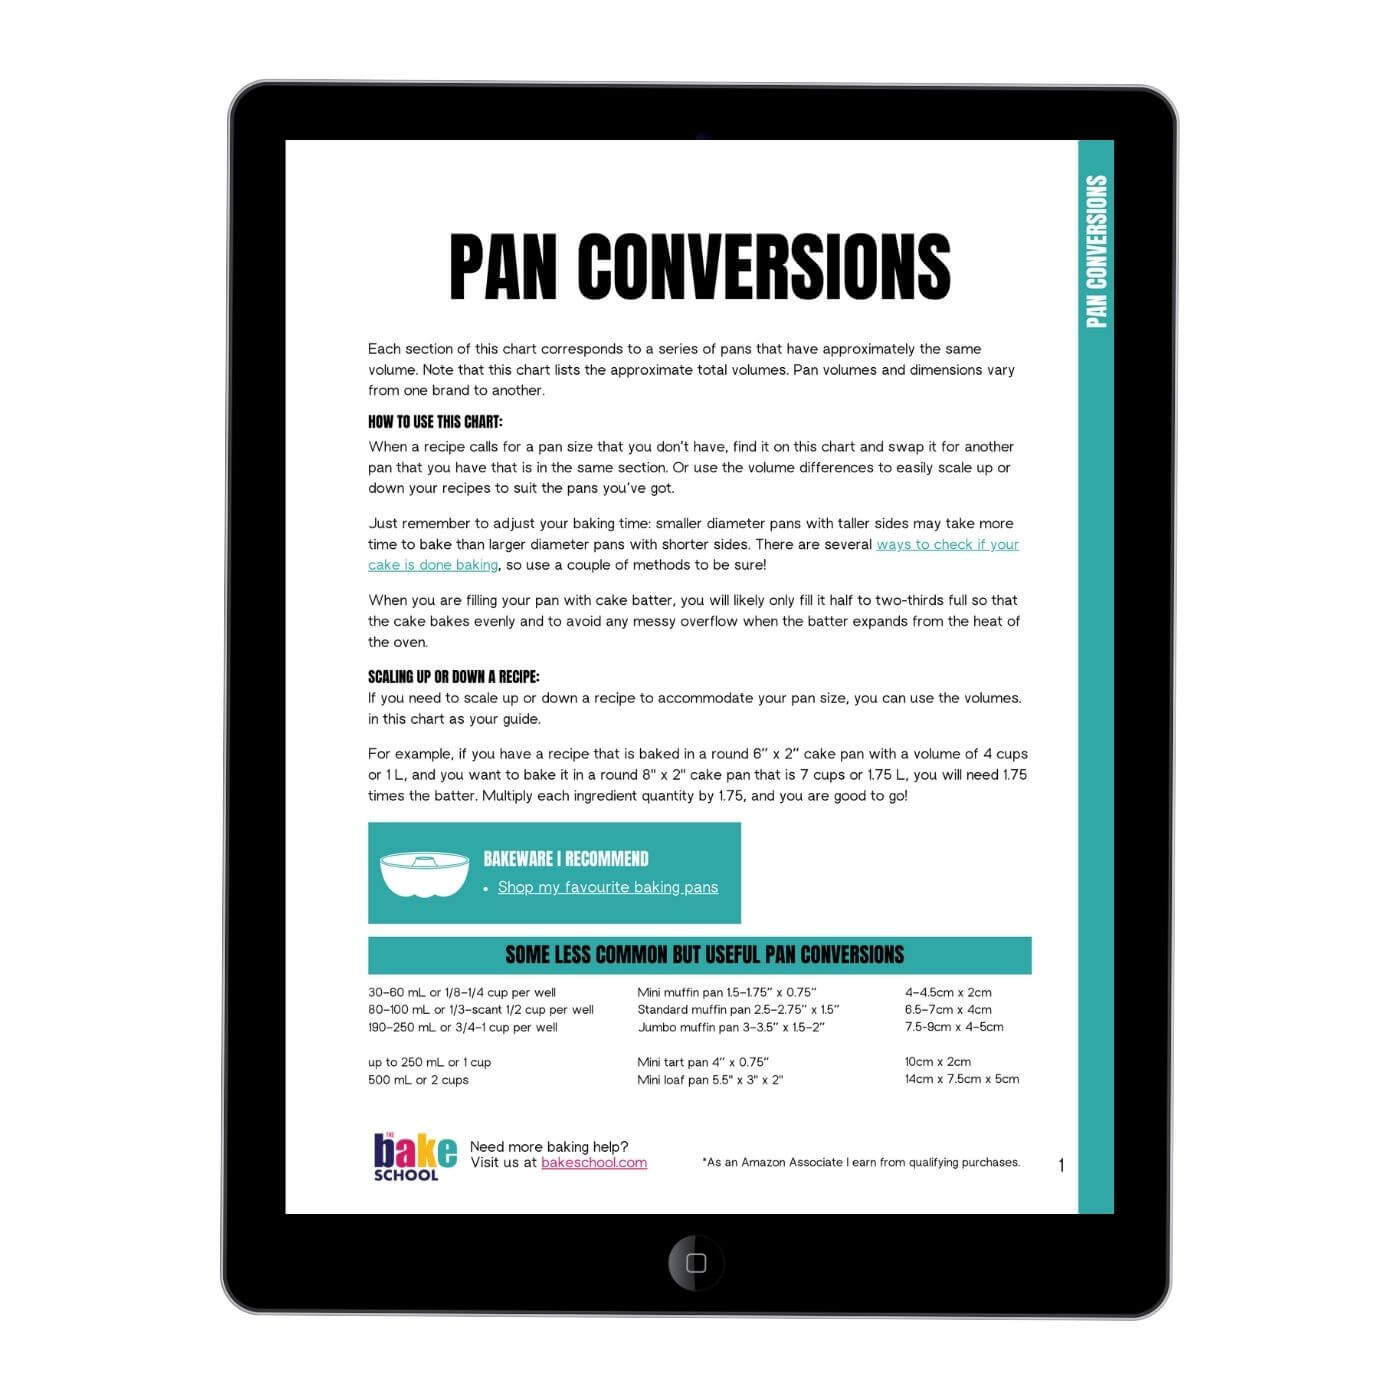 Baking pan conversions chart displayed on an iPad screen.